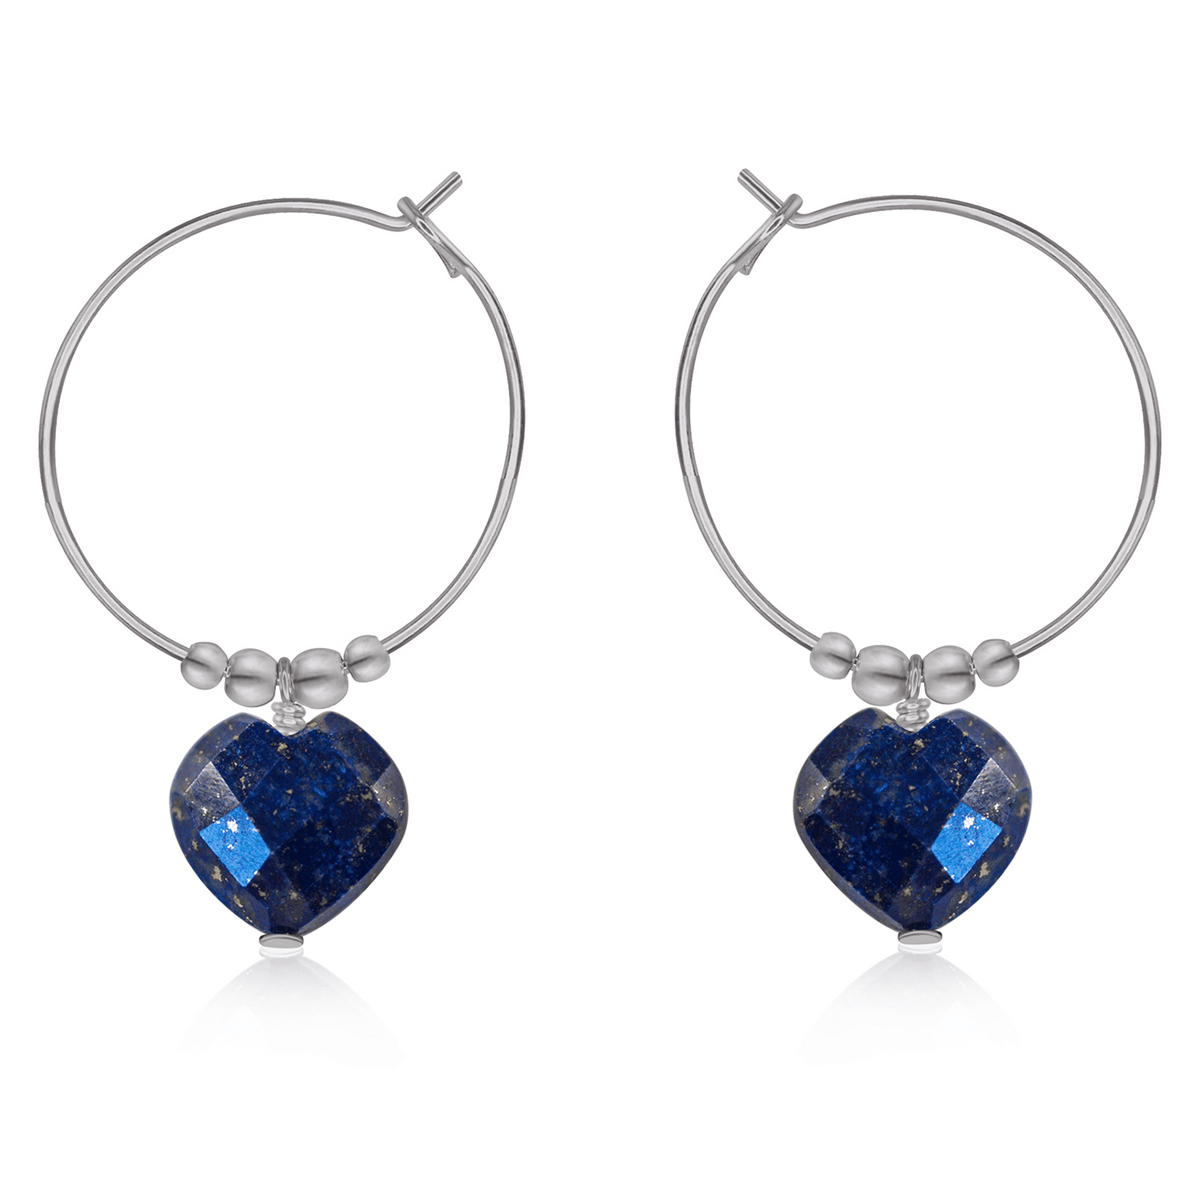 Lapis Lazuli Crystal Heart Dangle Hoop Earrings - Lapis Lazuli Crystal Heart Dangle Hoop Earrings - Stainless Steel - Luna Tide Handmade Crystal Jewellery